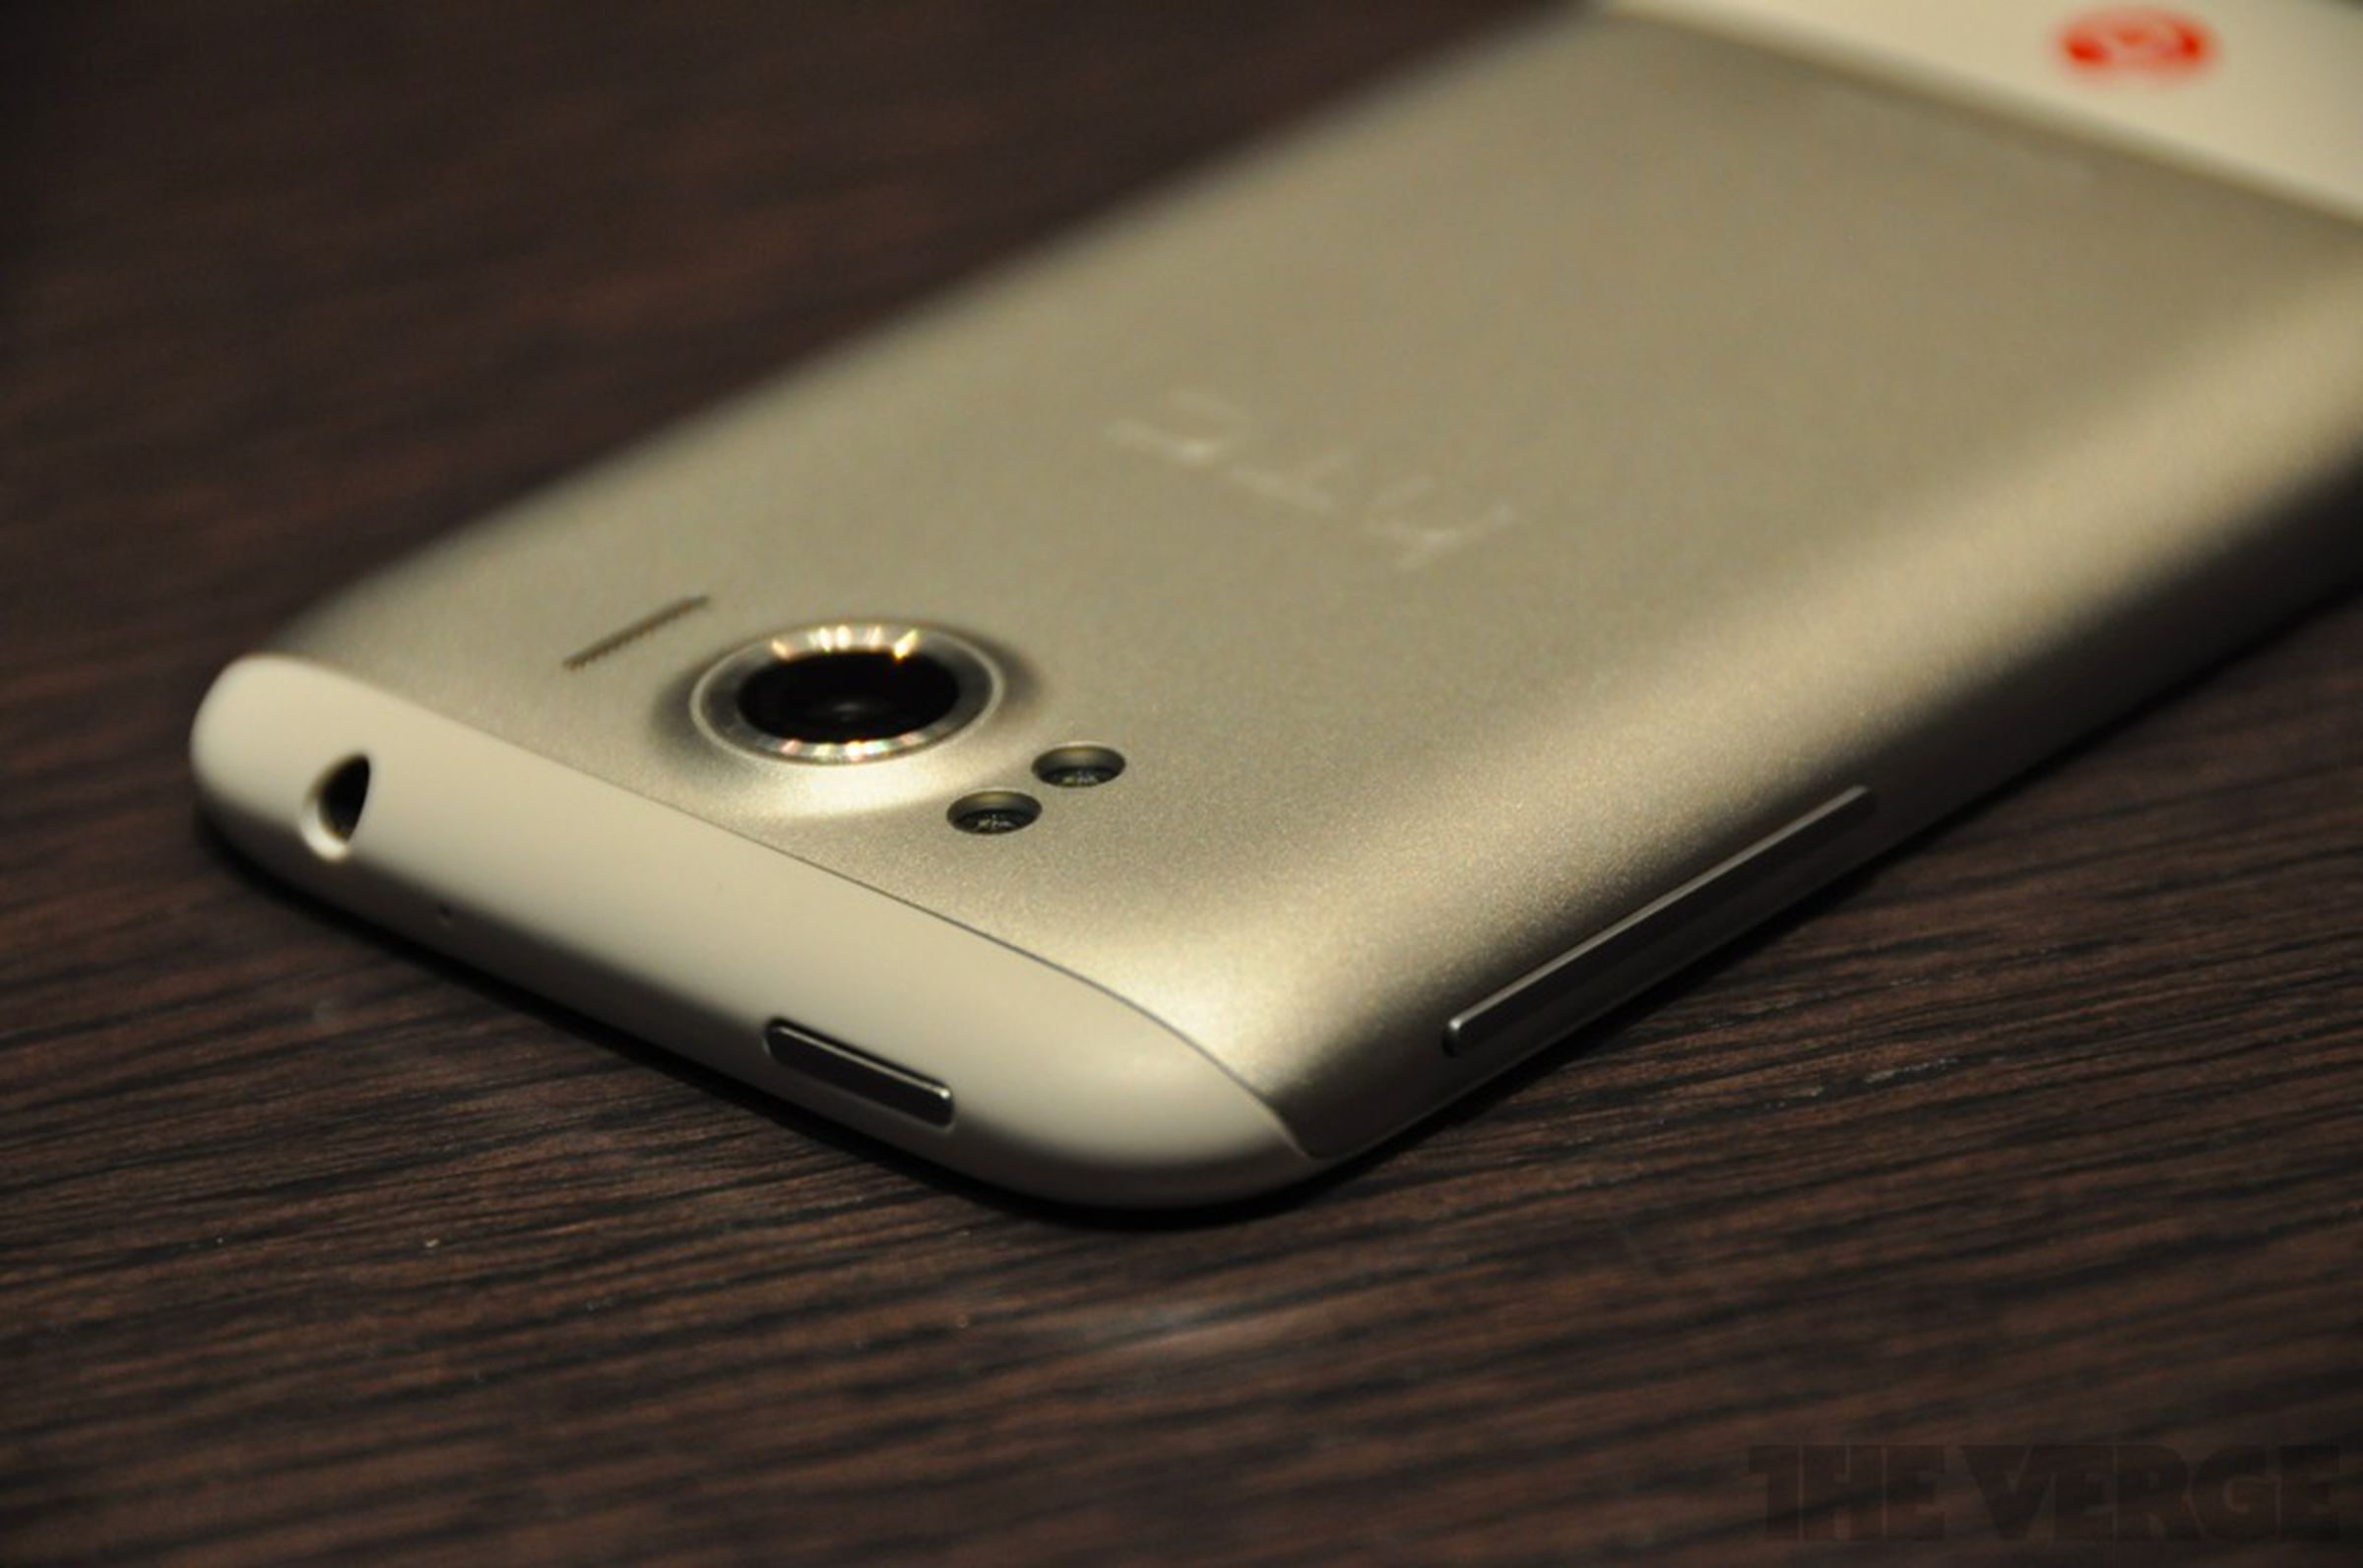 HTC Sensation XL hands-on